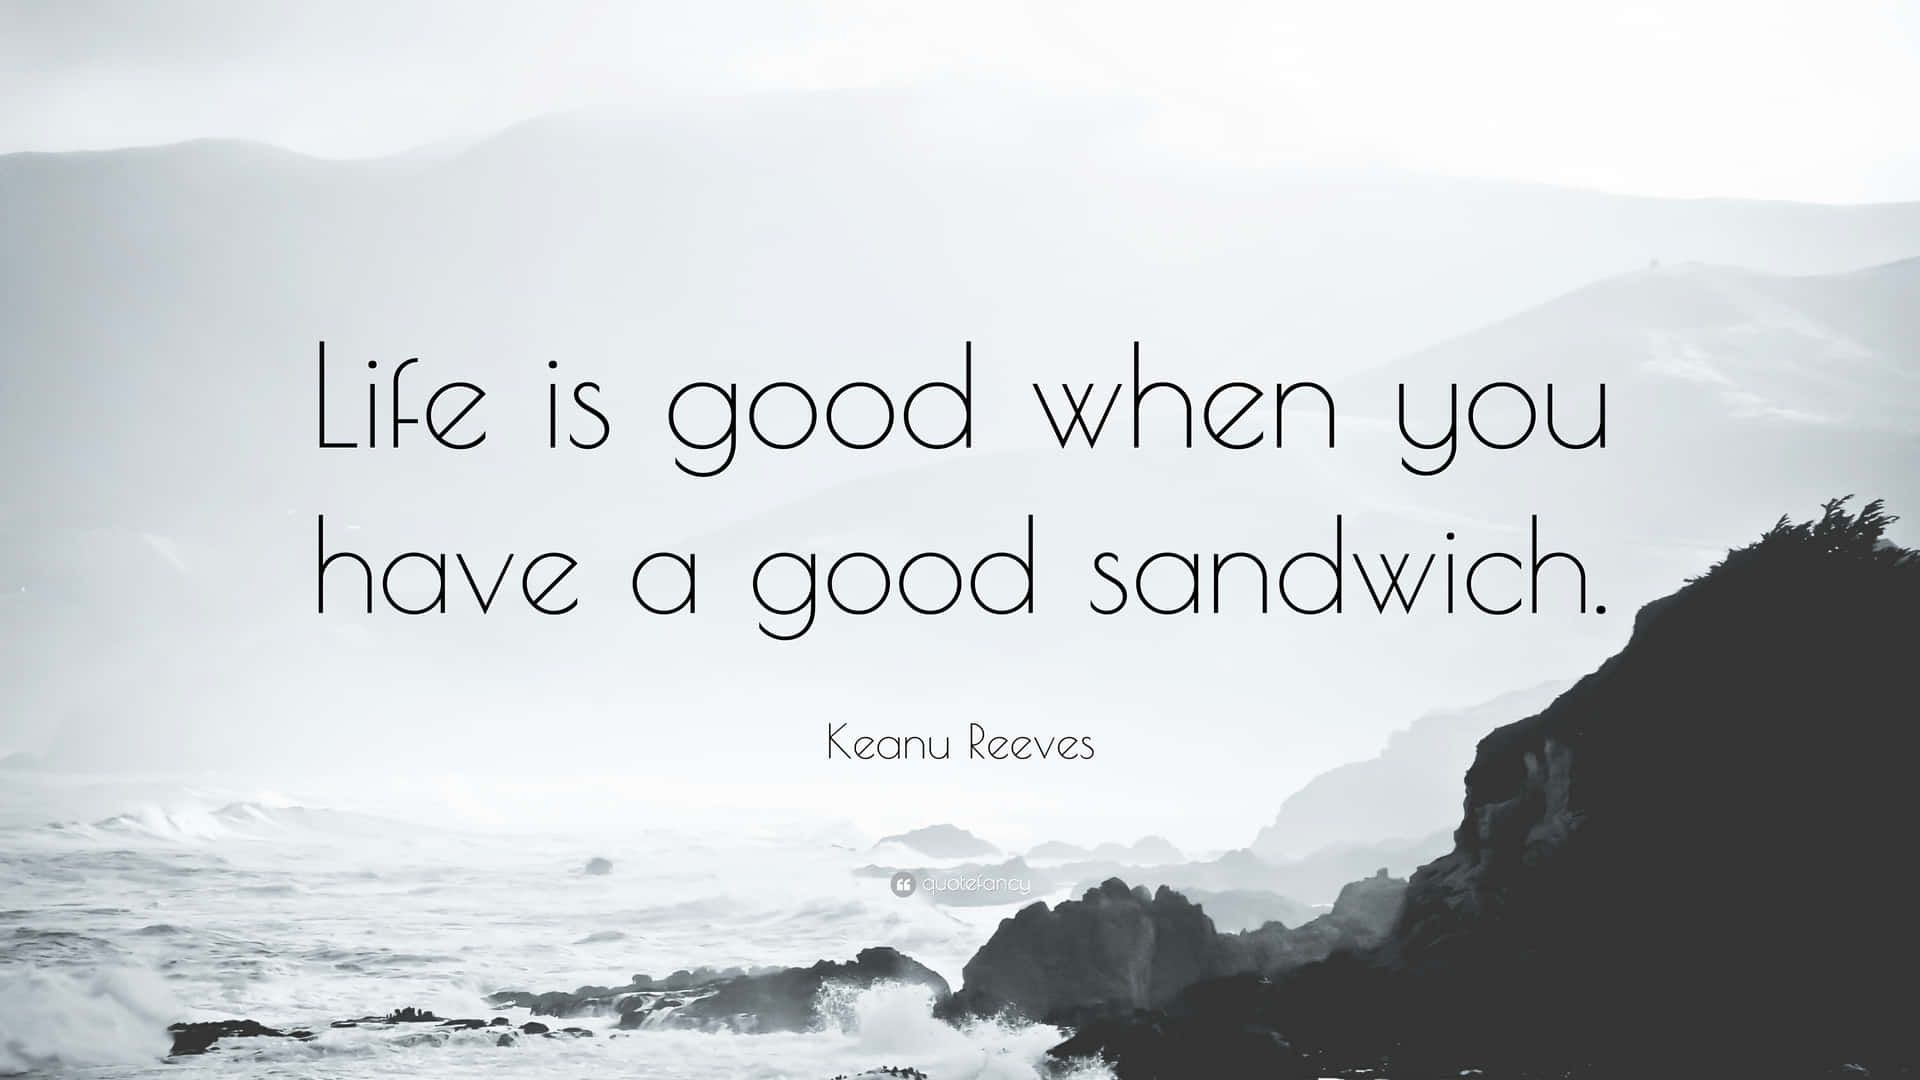 Liv er godt, når du har en god sandwich Wallpaper